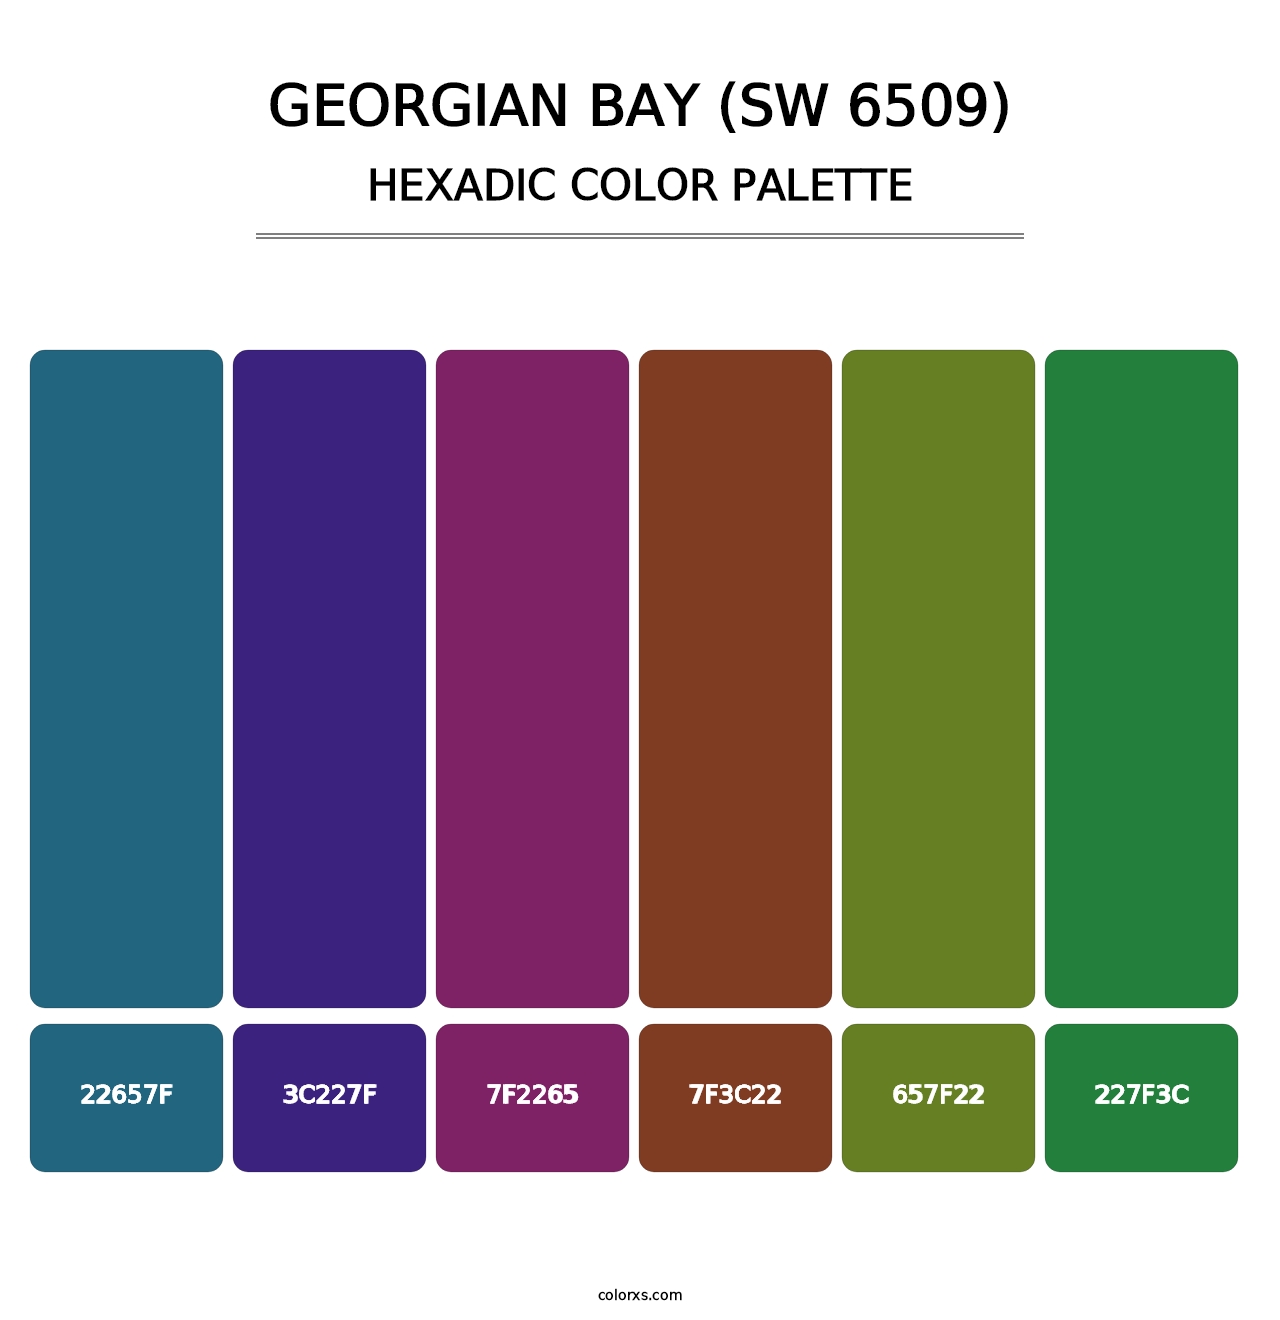 Georgian Bay (SW 6509) - Hexadic Color Palette